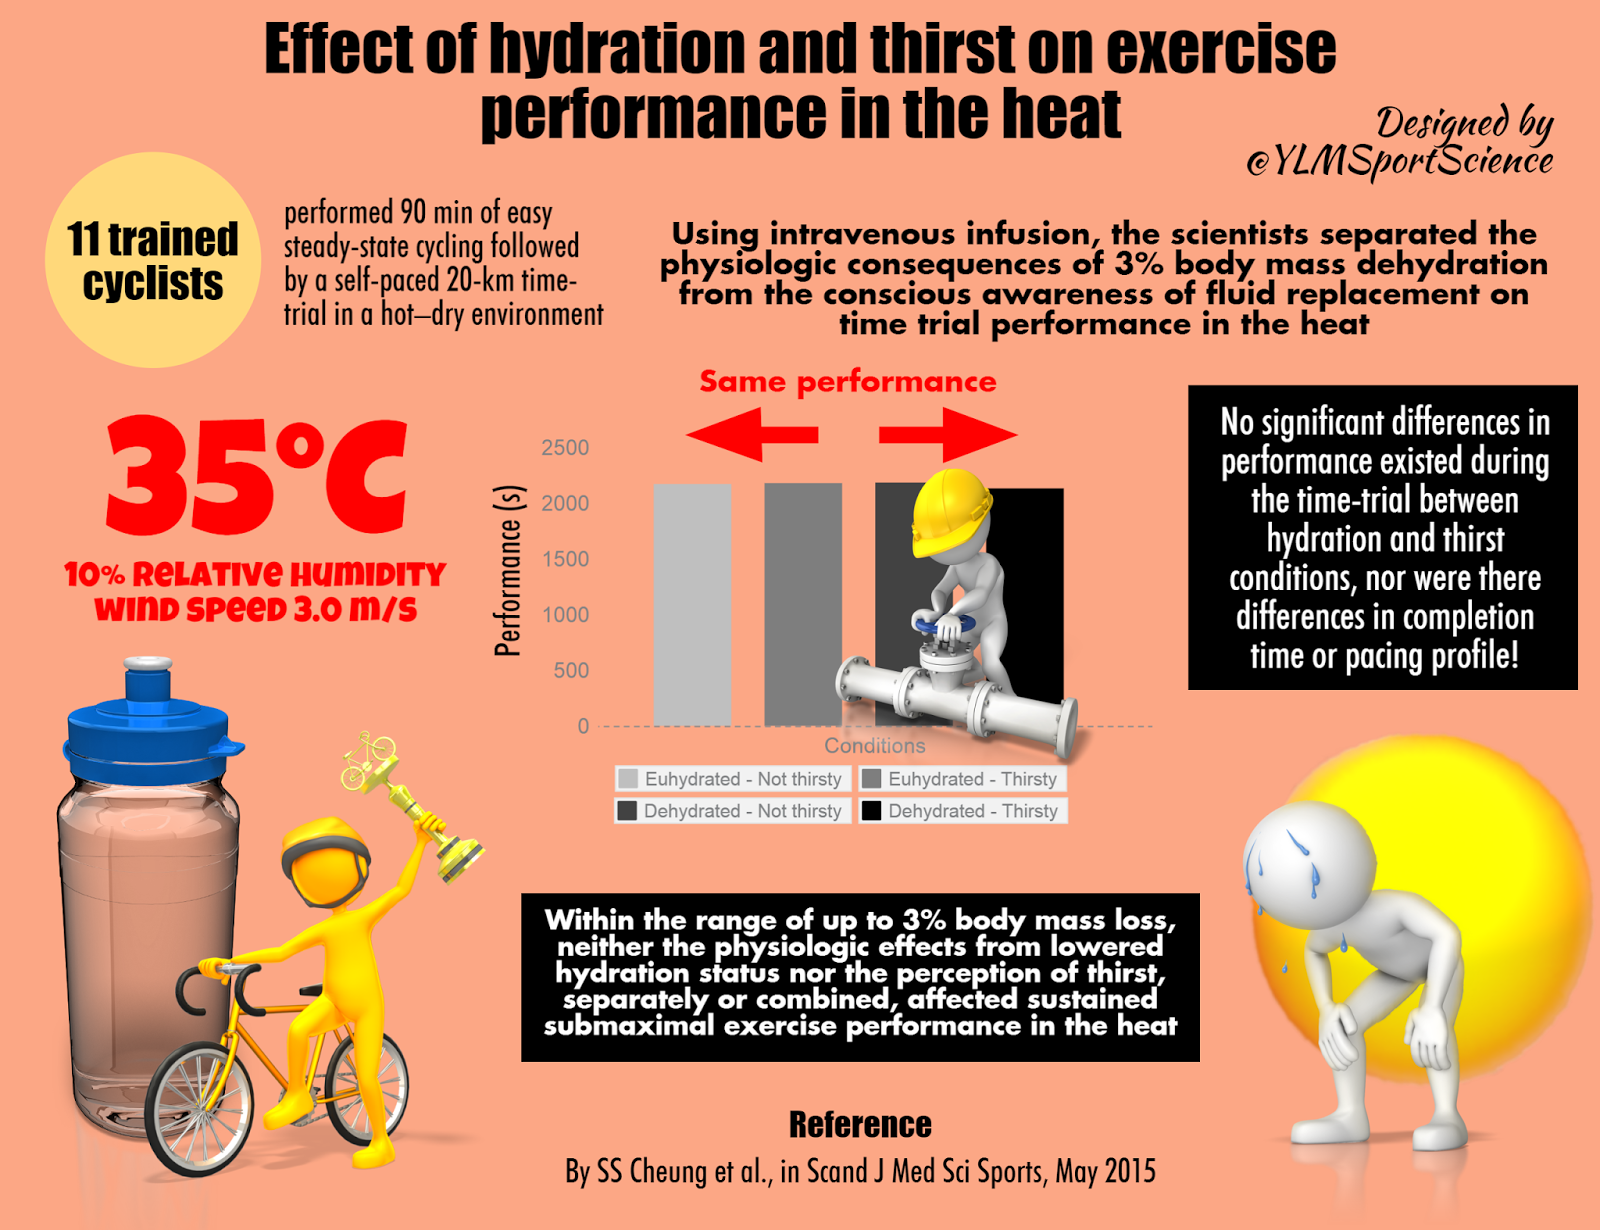 Hydration and sports performance metrics